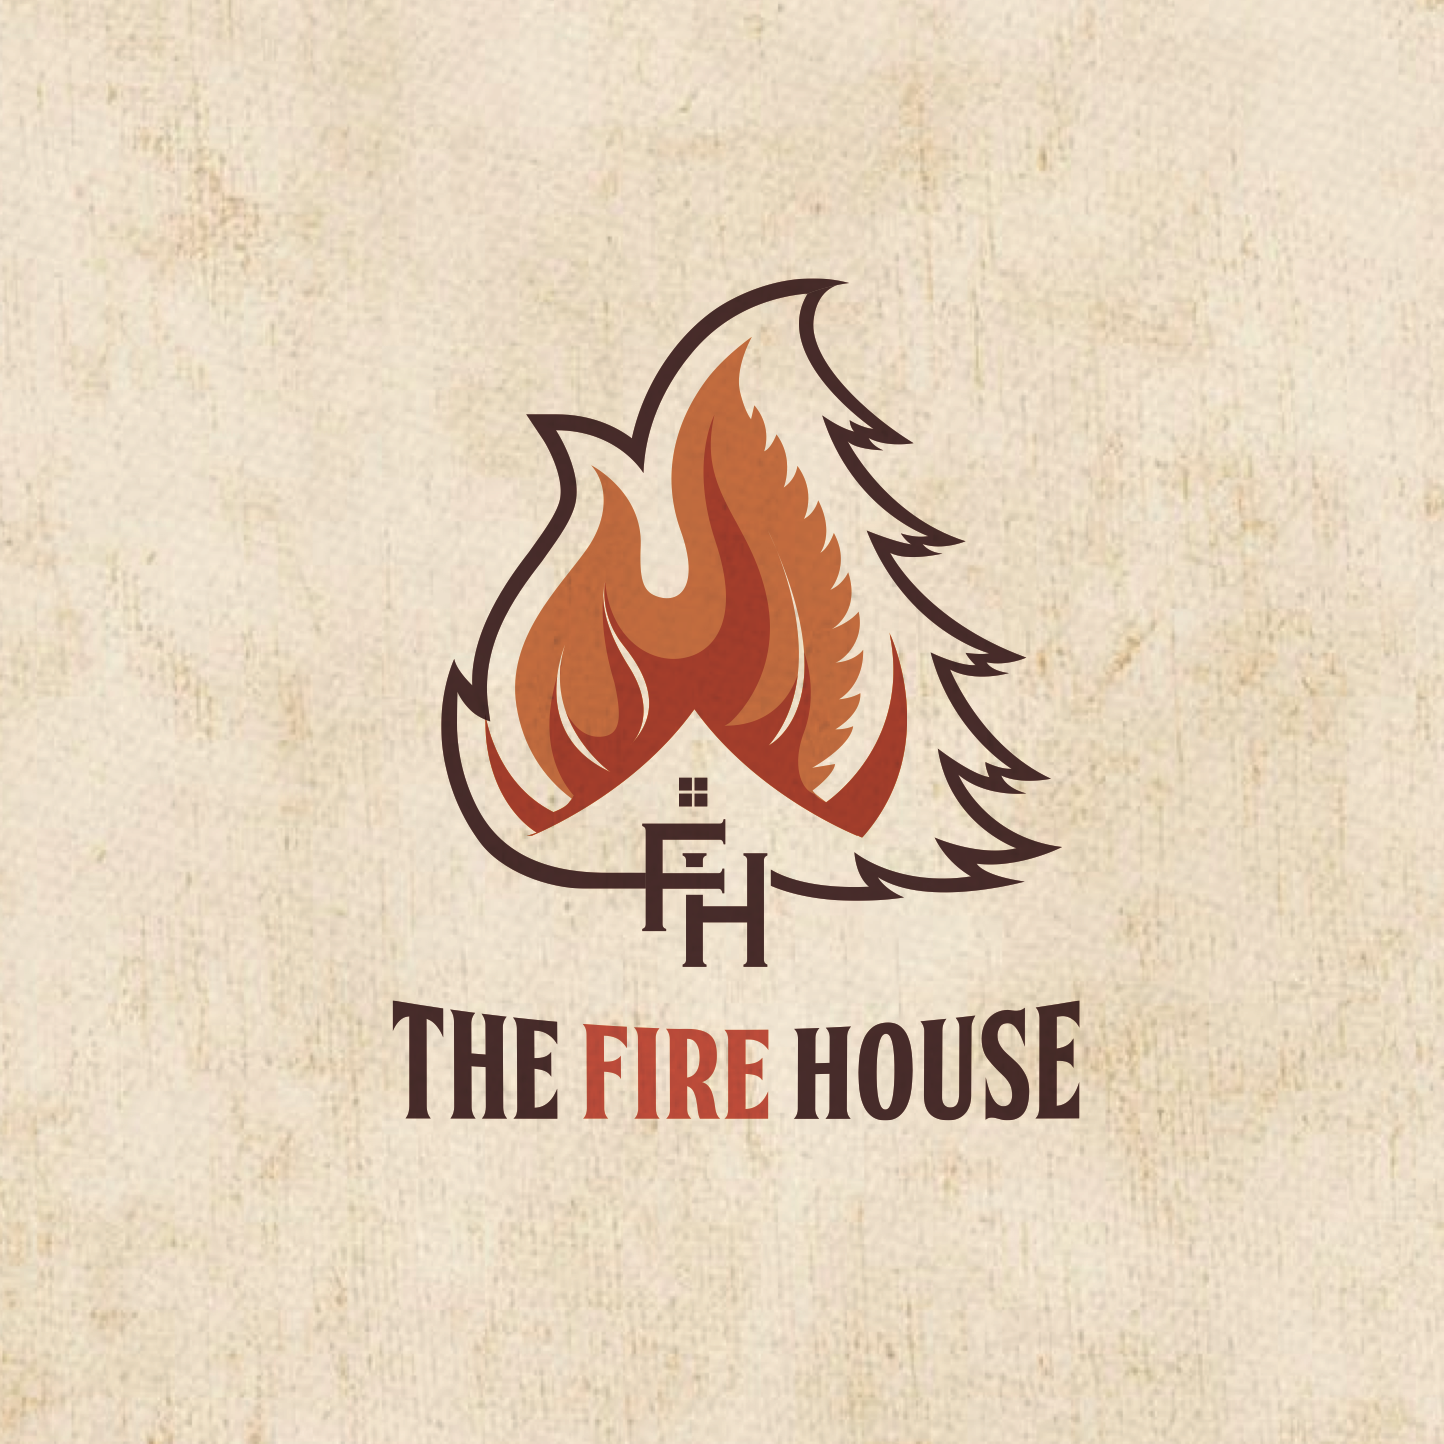 The Fire House logo